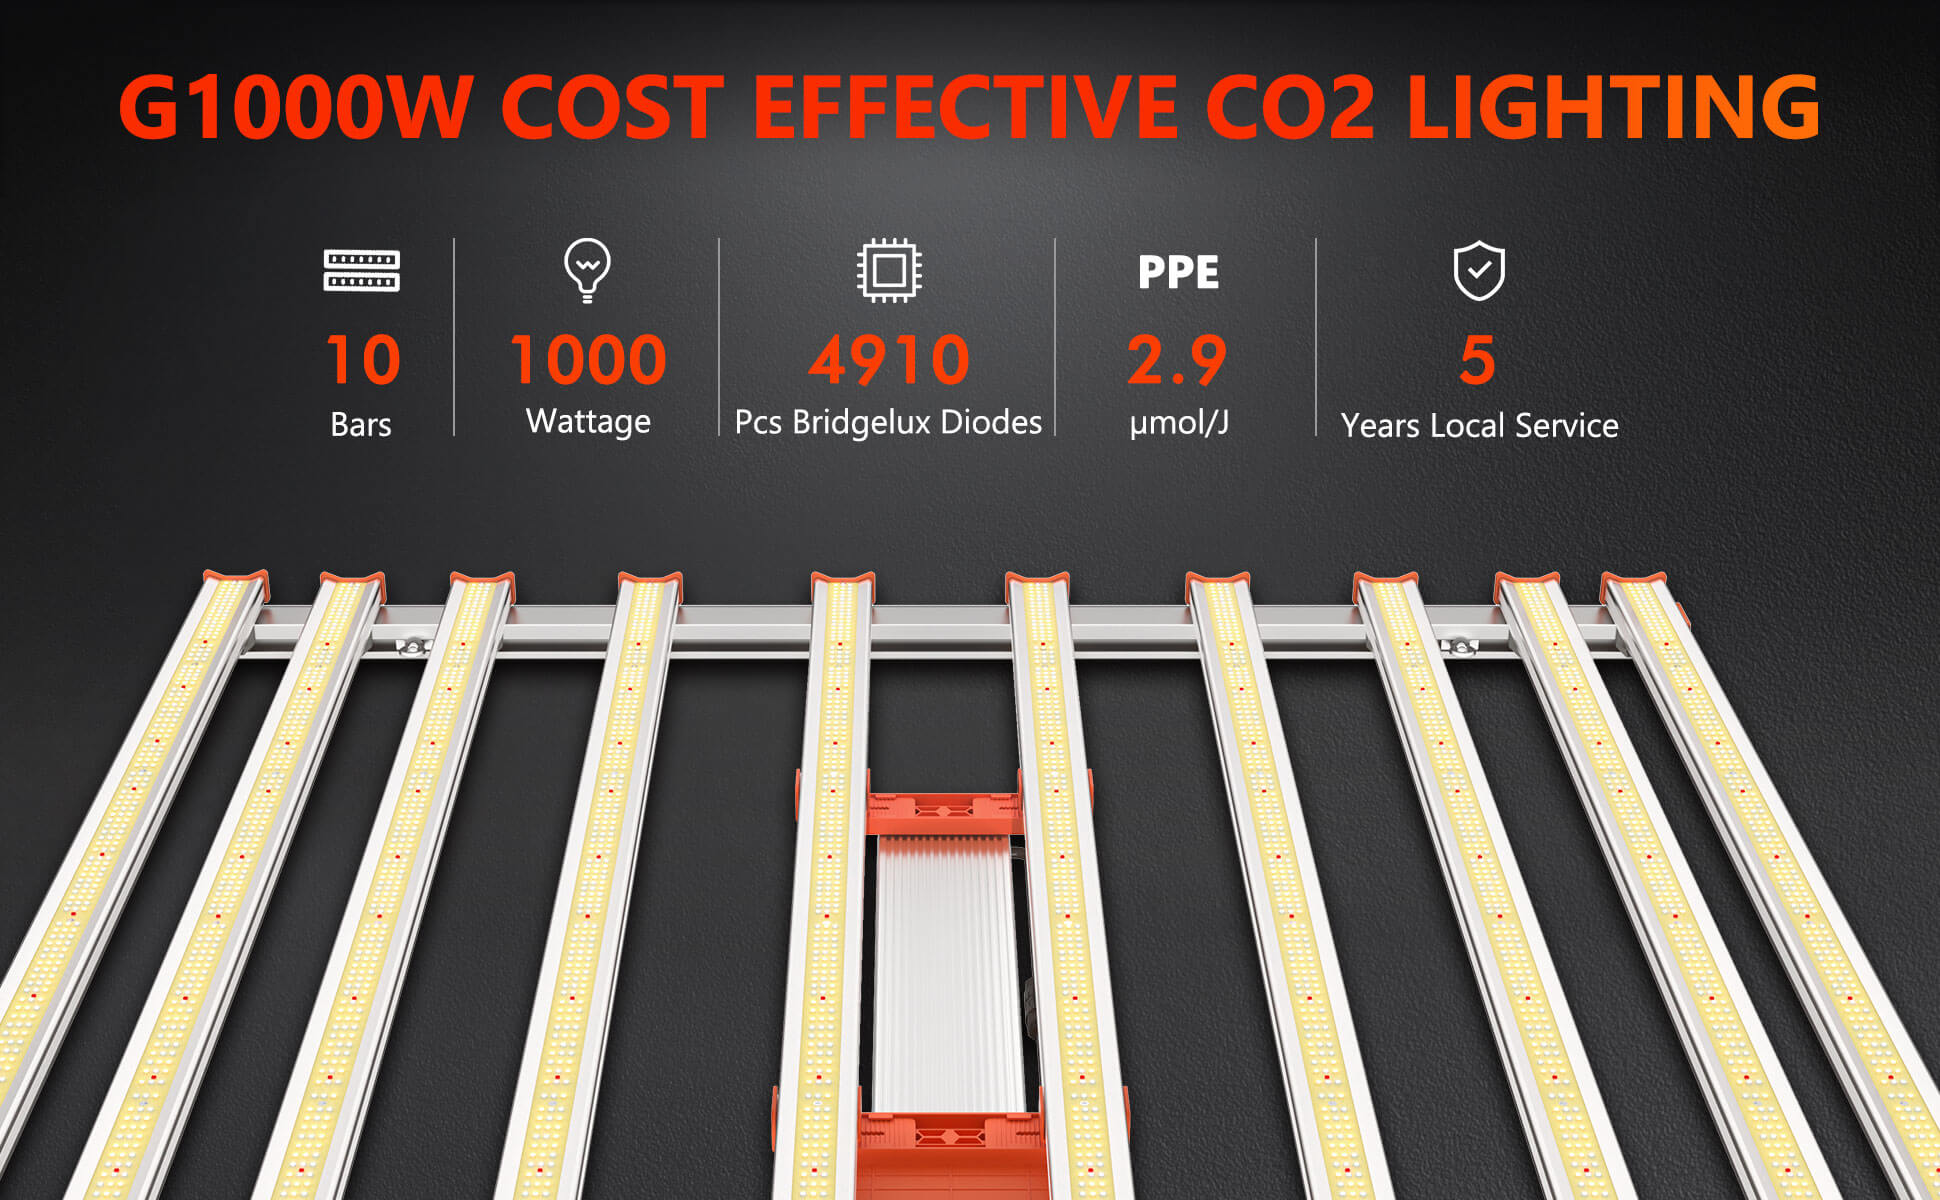 G1000W cost effective CO2 lighting